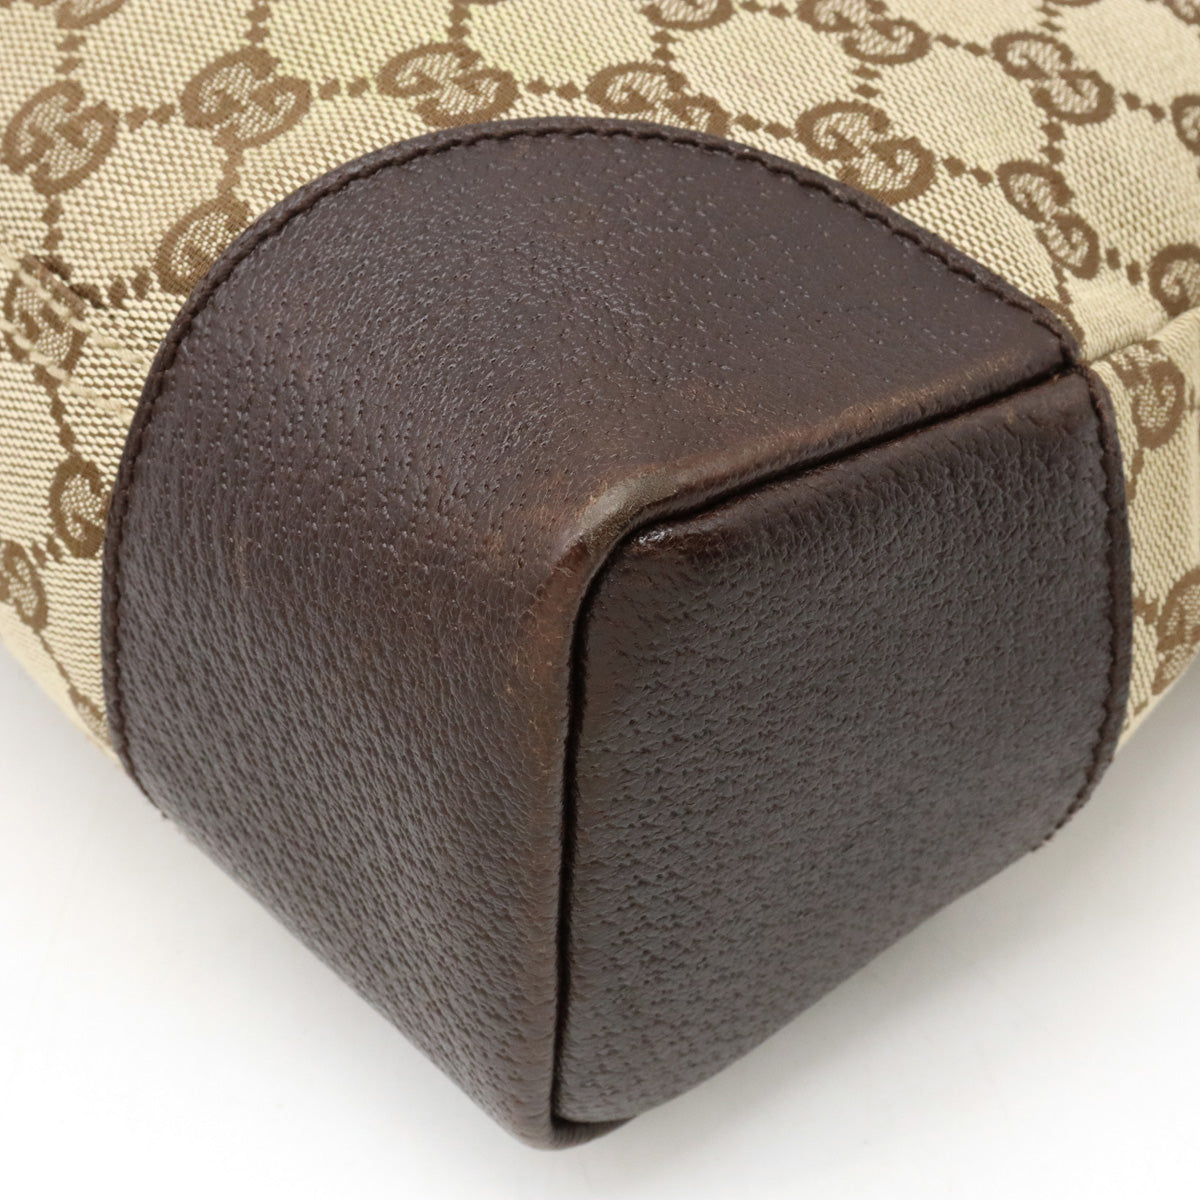 Gucci GG Canvas Charm Tote Bag